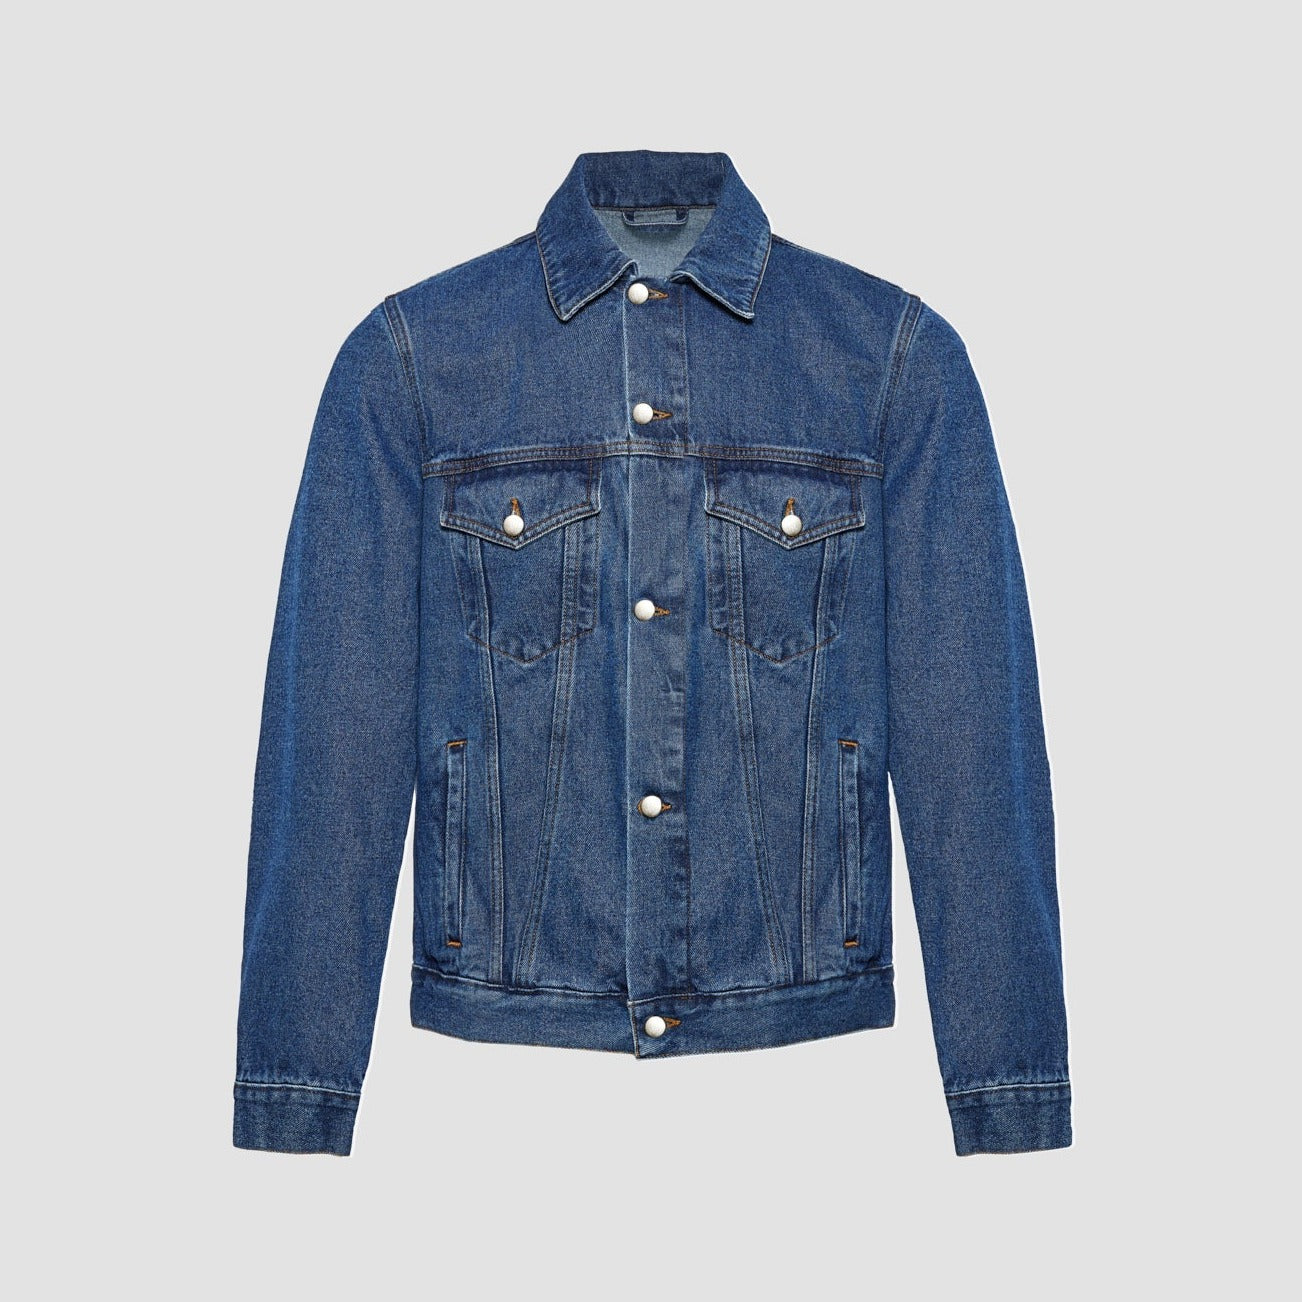 The Proper Denim Jacket ™ Indigo Blue - The Proper Label ™